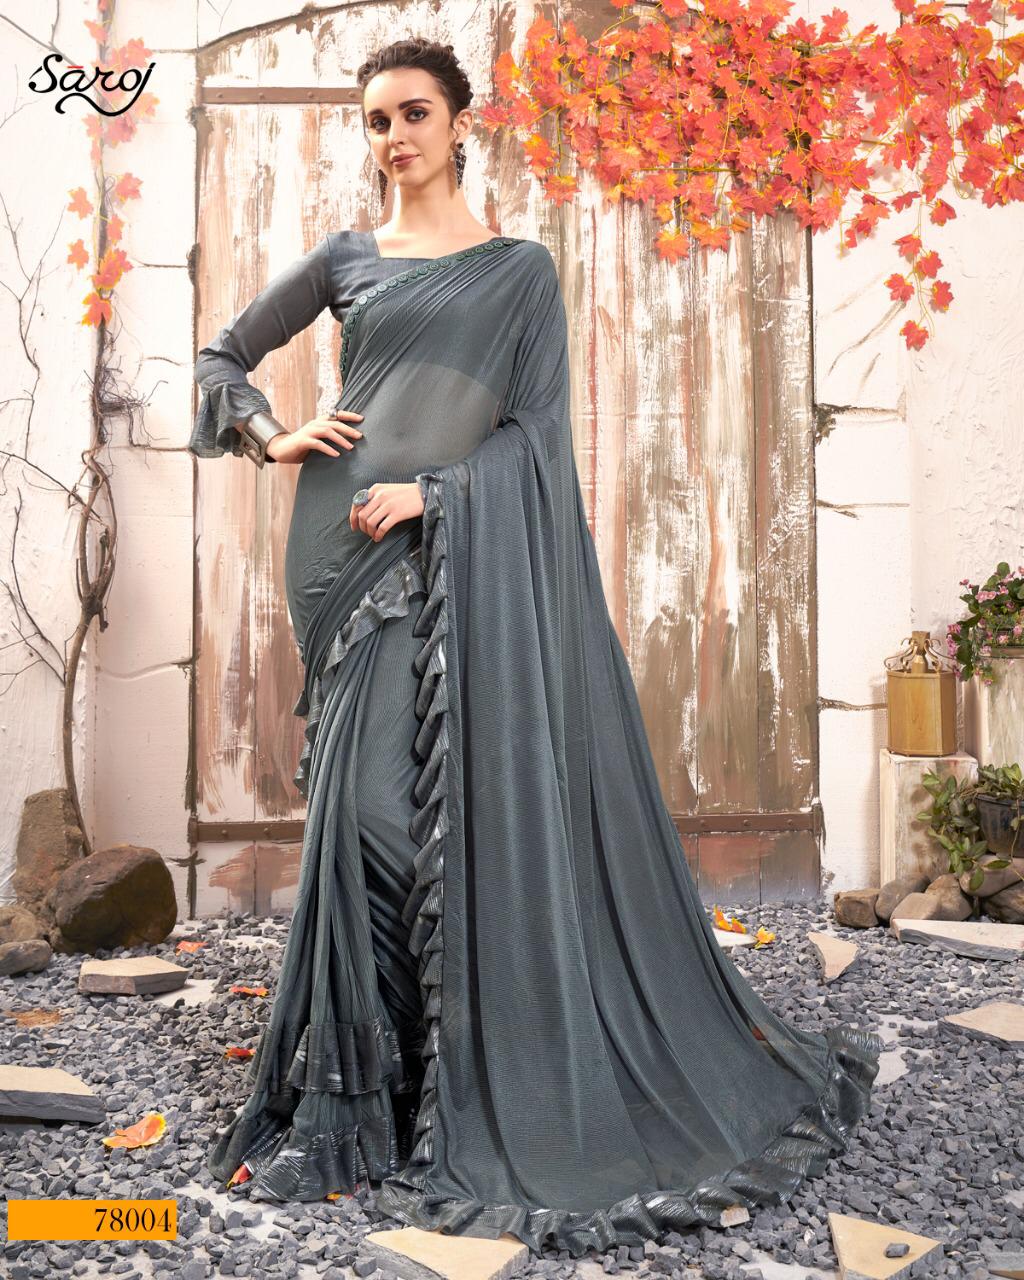 Saroj sandalwood vol-2 astonishing style beautifully designed sarees